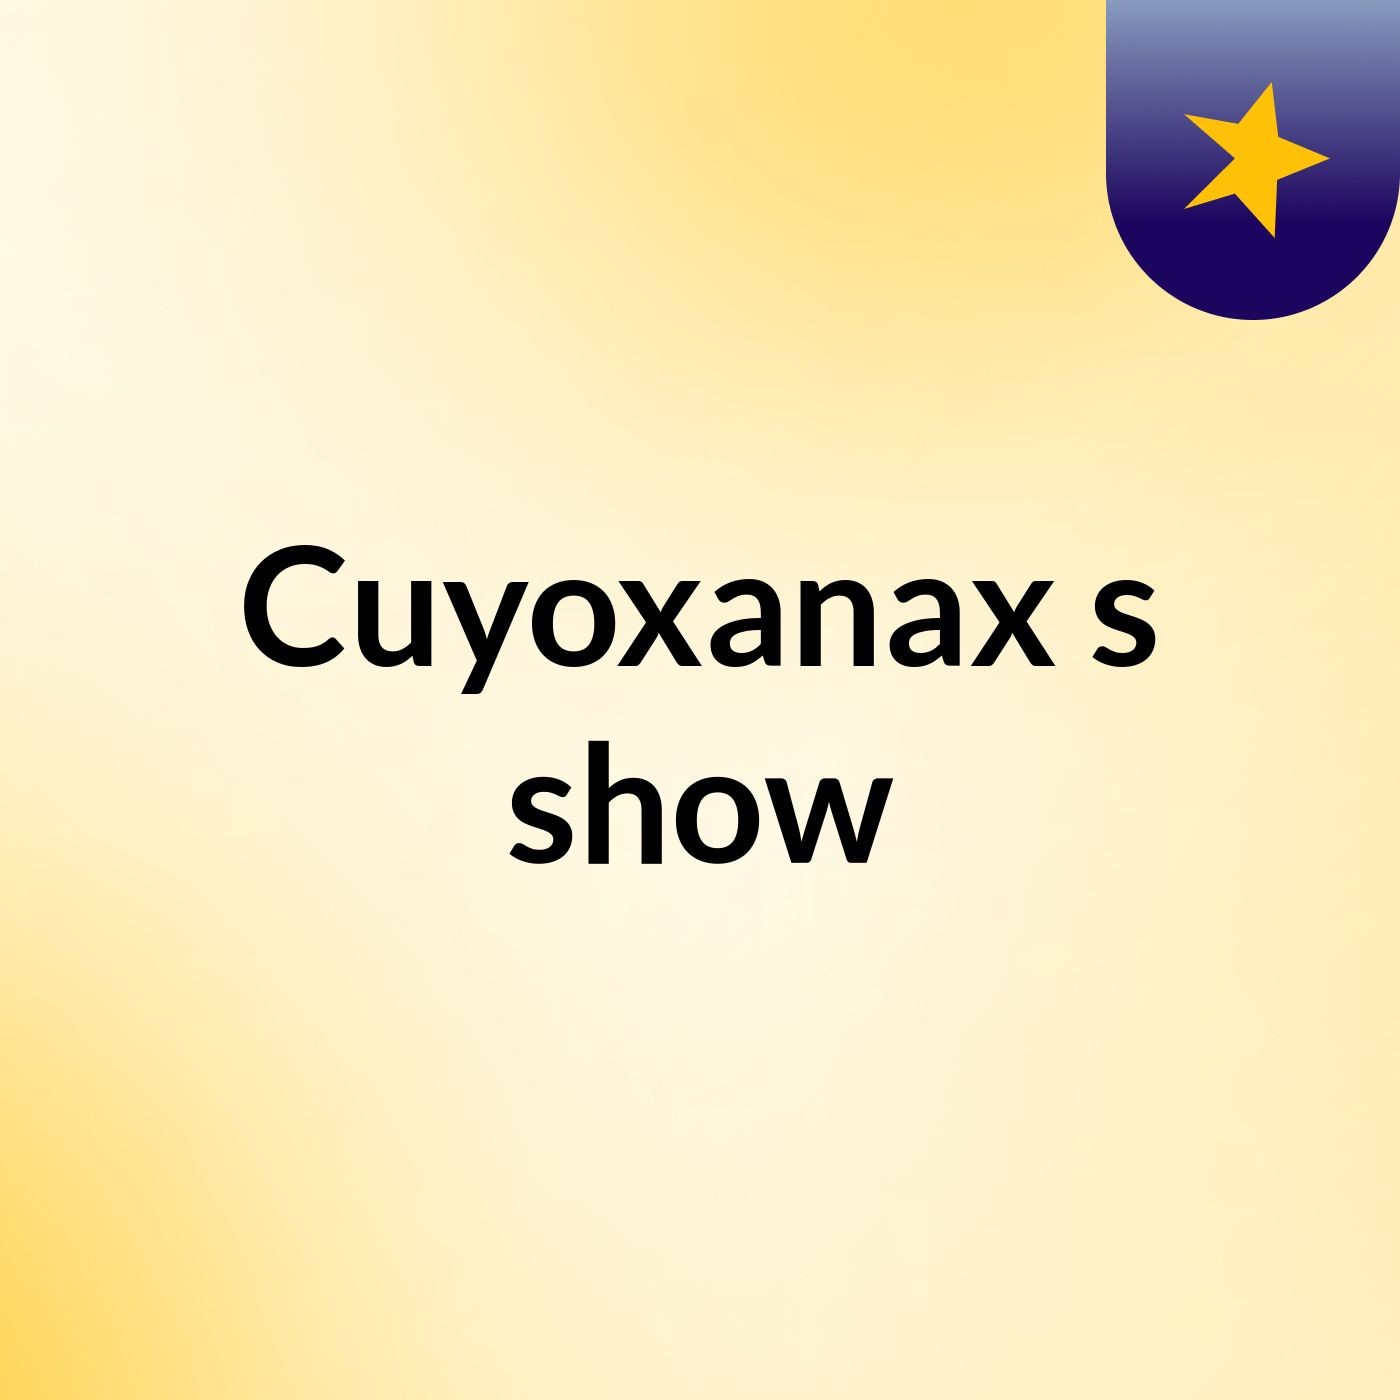 Cuyoxanax's show